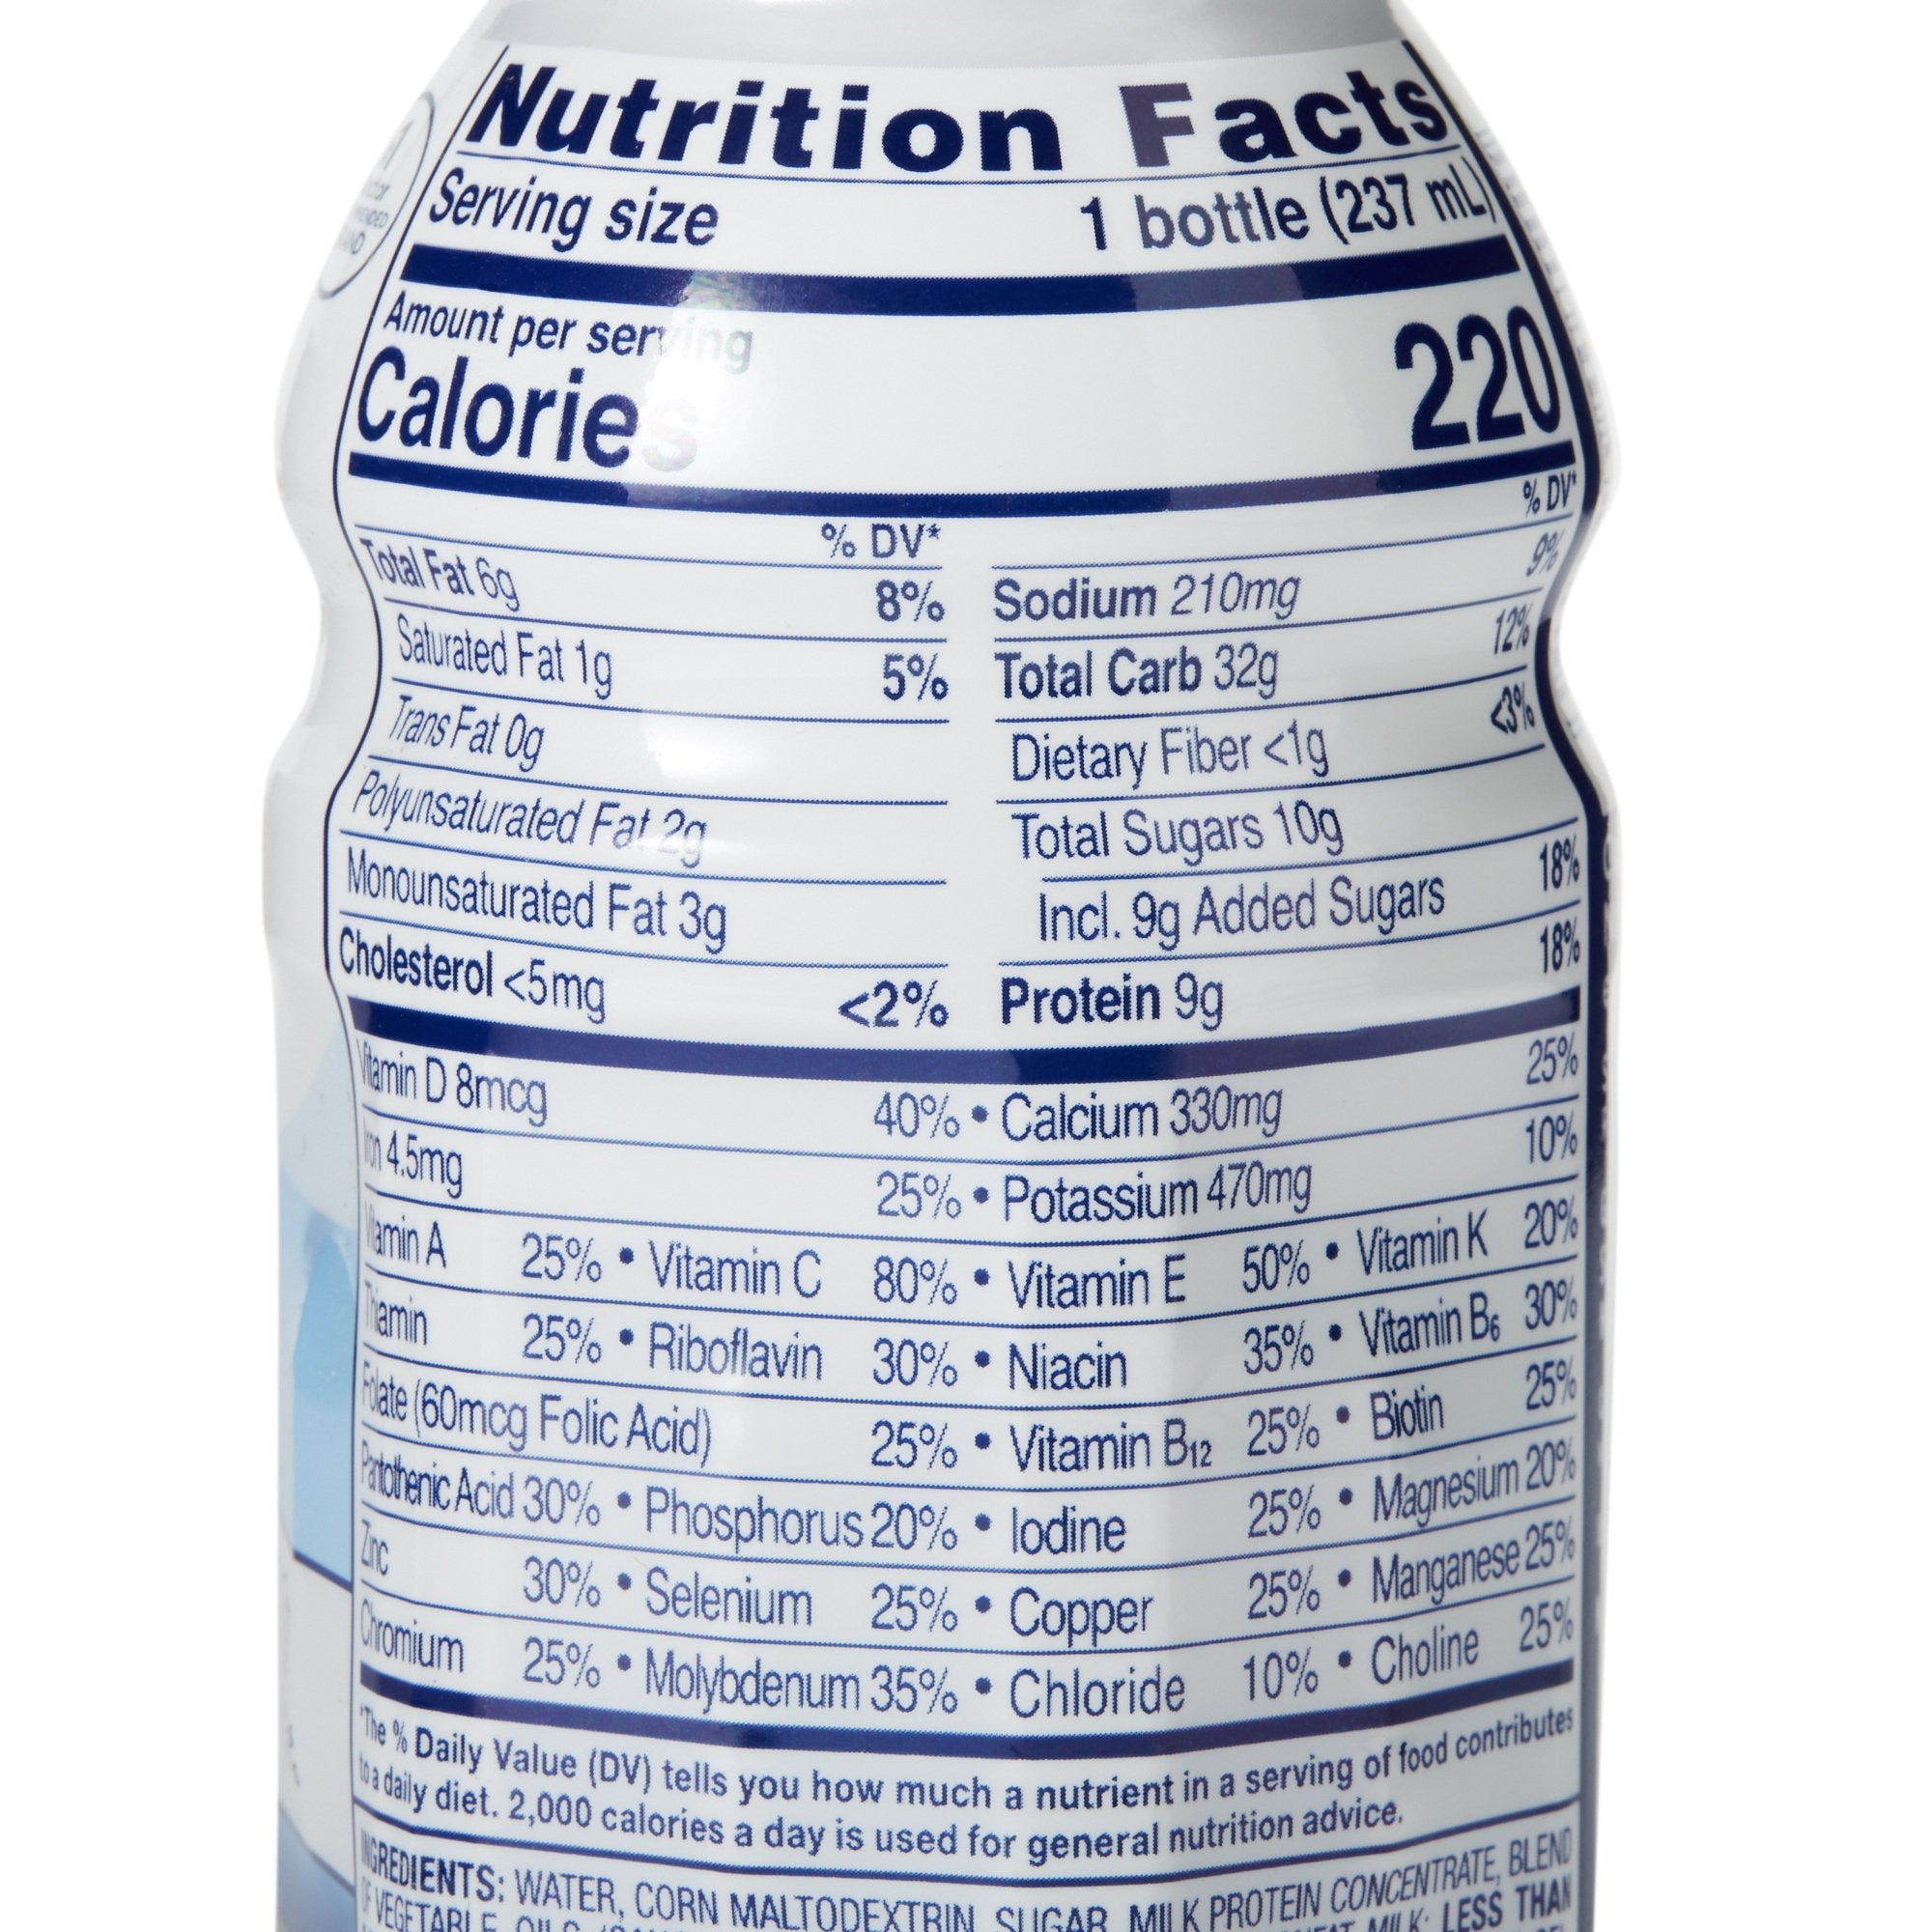 Ensure® Original Vanilla Nutrition Shake - 8 oz. Bottles (6-Pack)